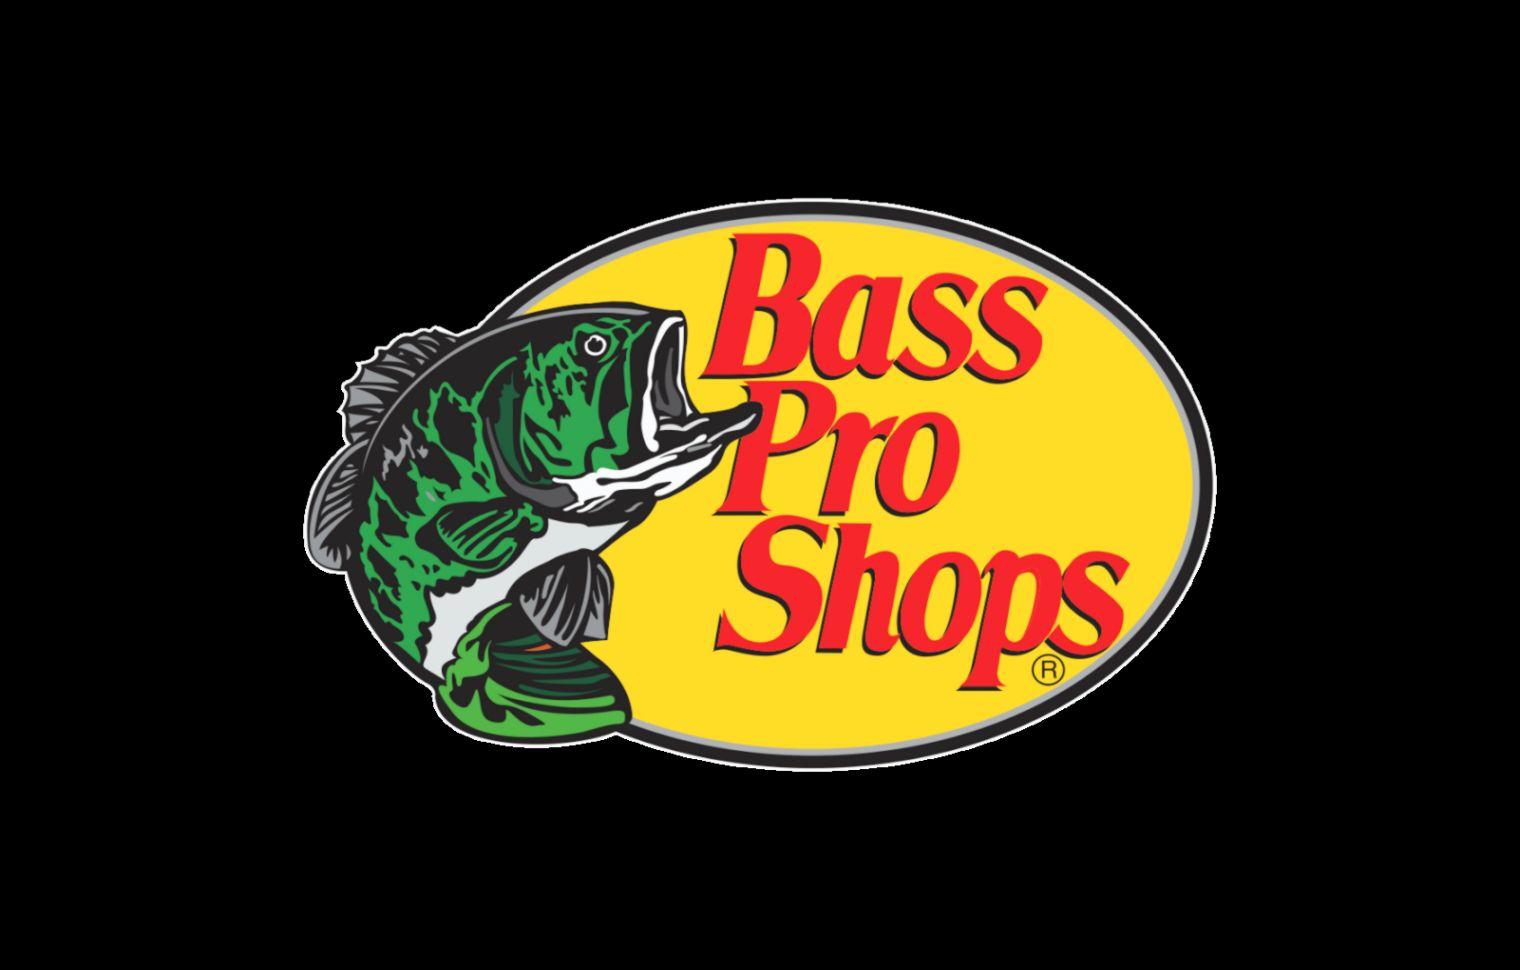 Bass Pro Shop Backgrounds - Wallpaper Cave